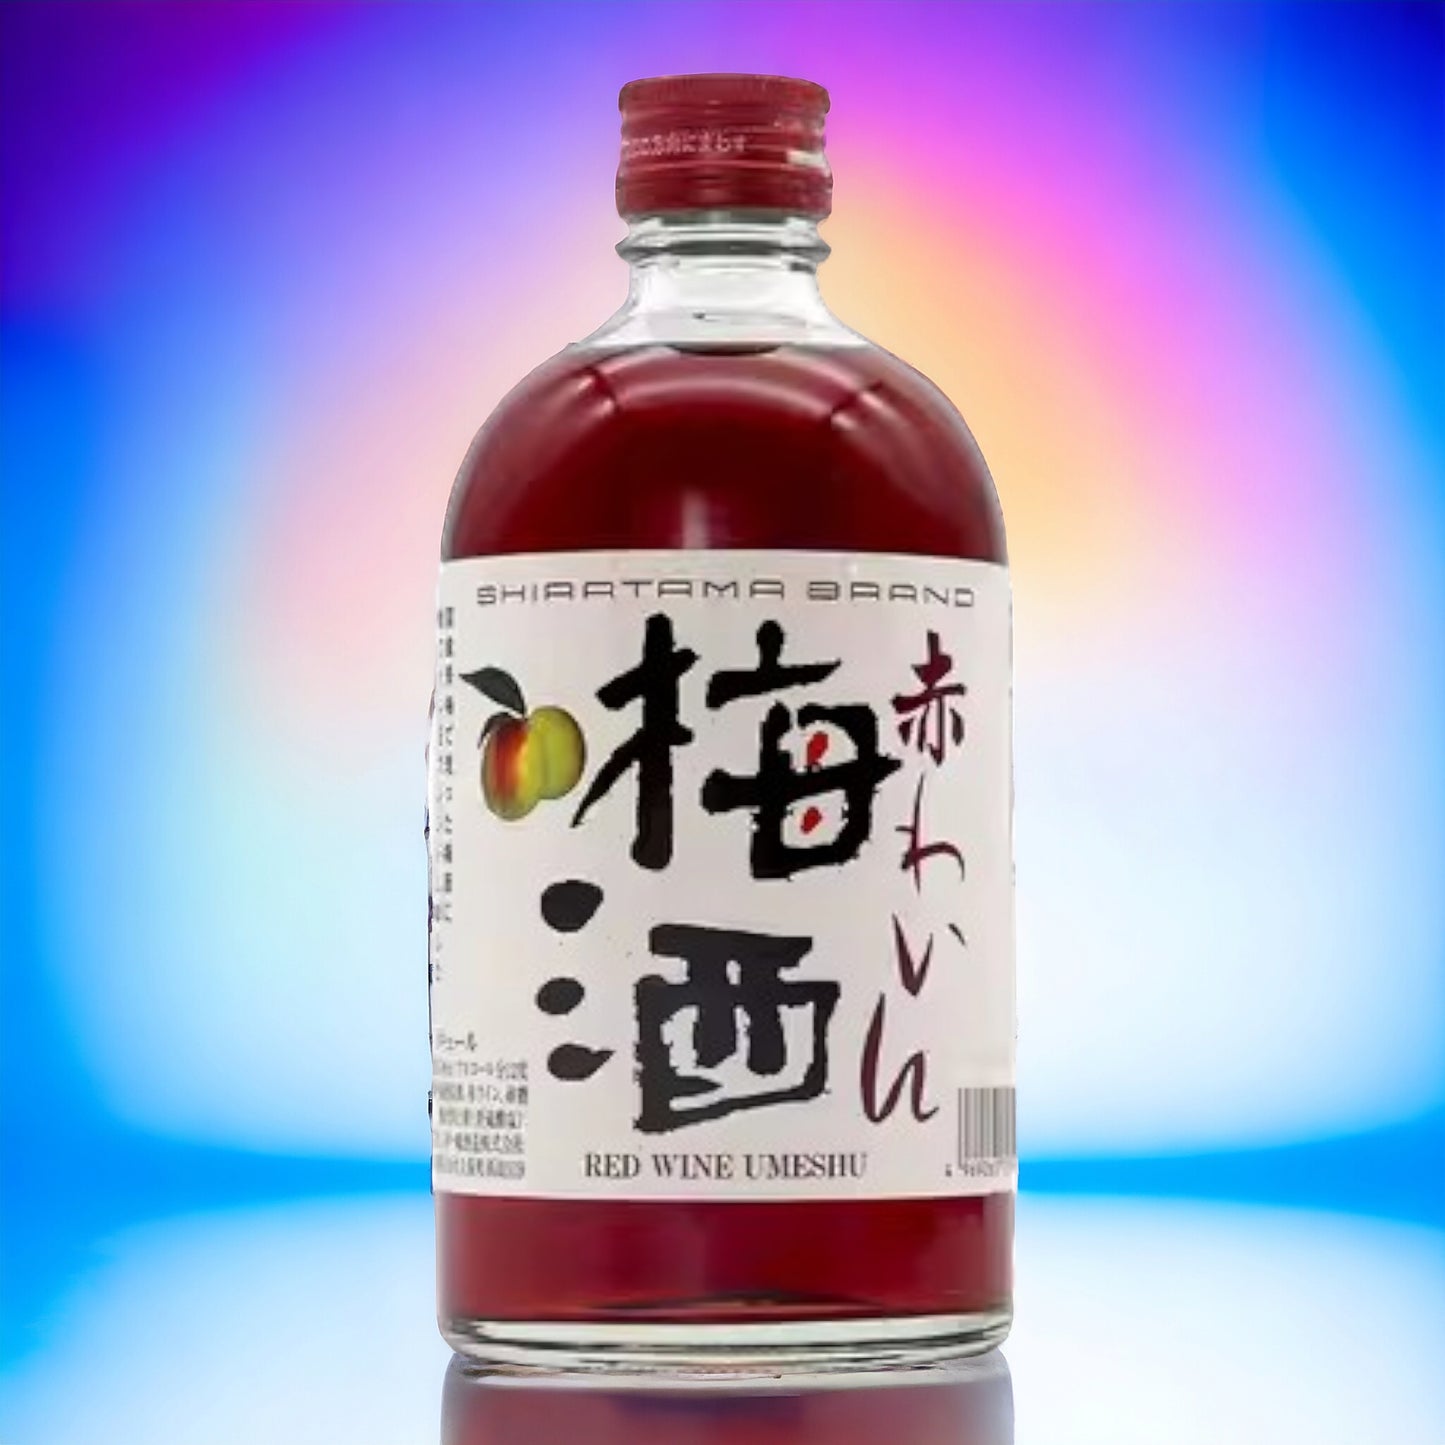 Akashi 明石紅酒梅酒 12% 500ml umeshu Lillion Wine Offer Fruit Wine Shin